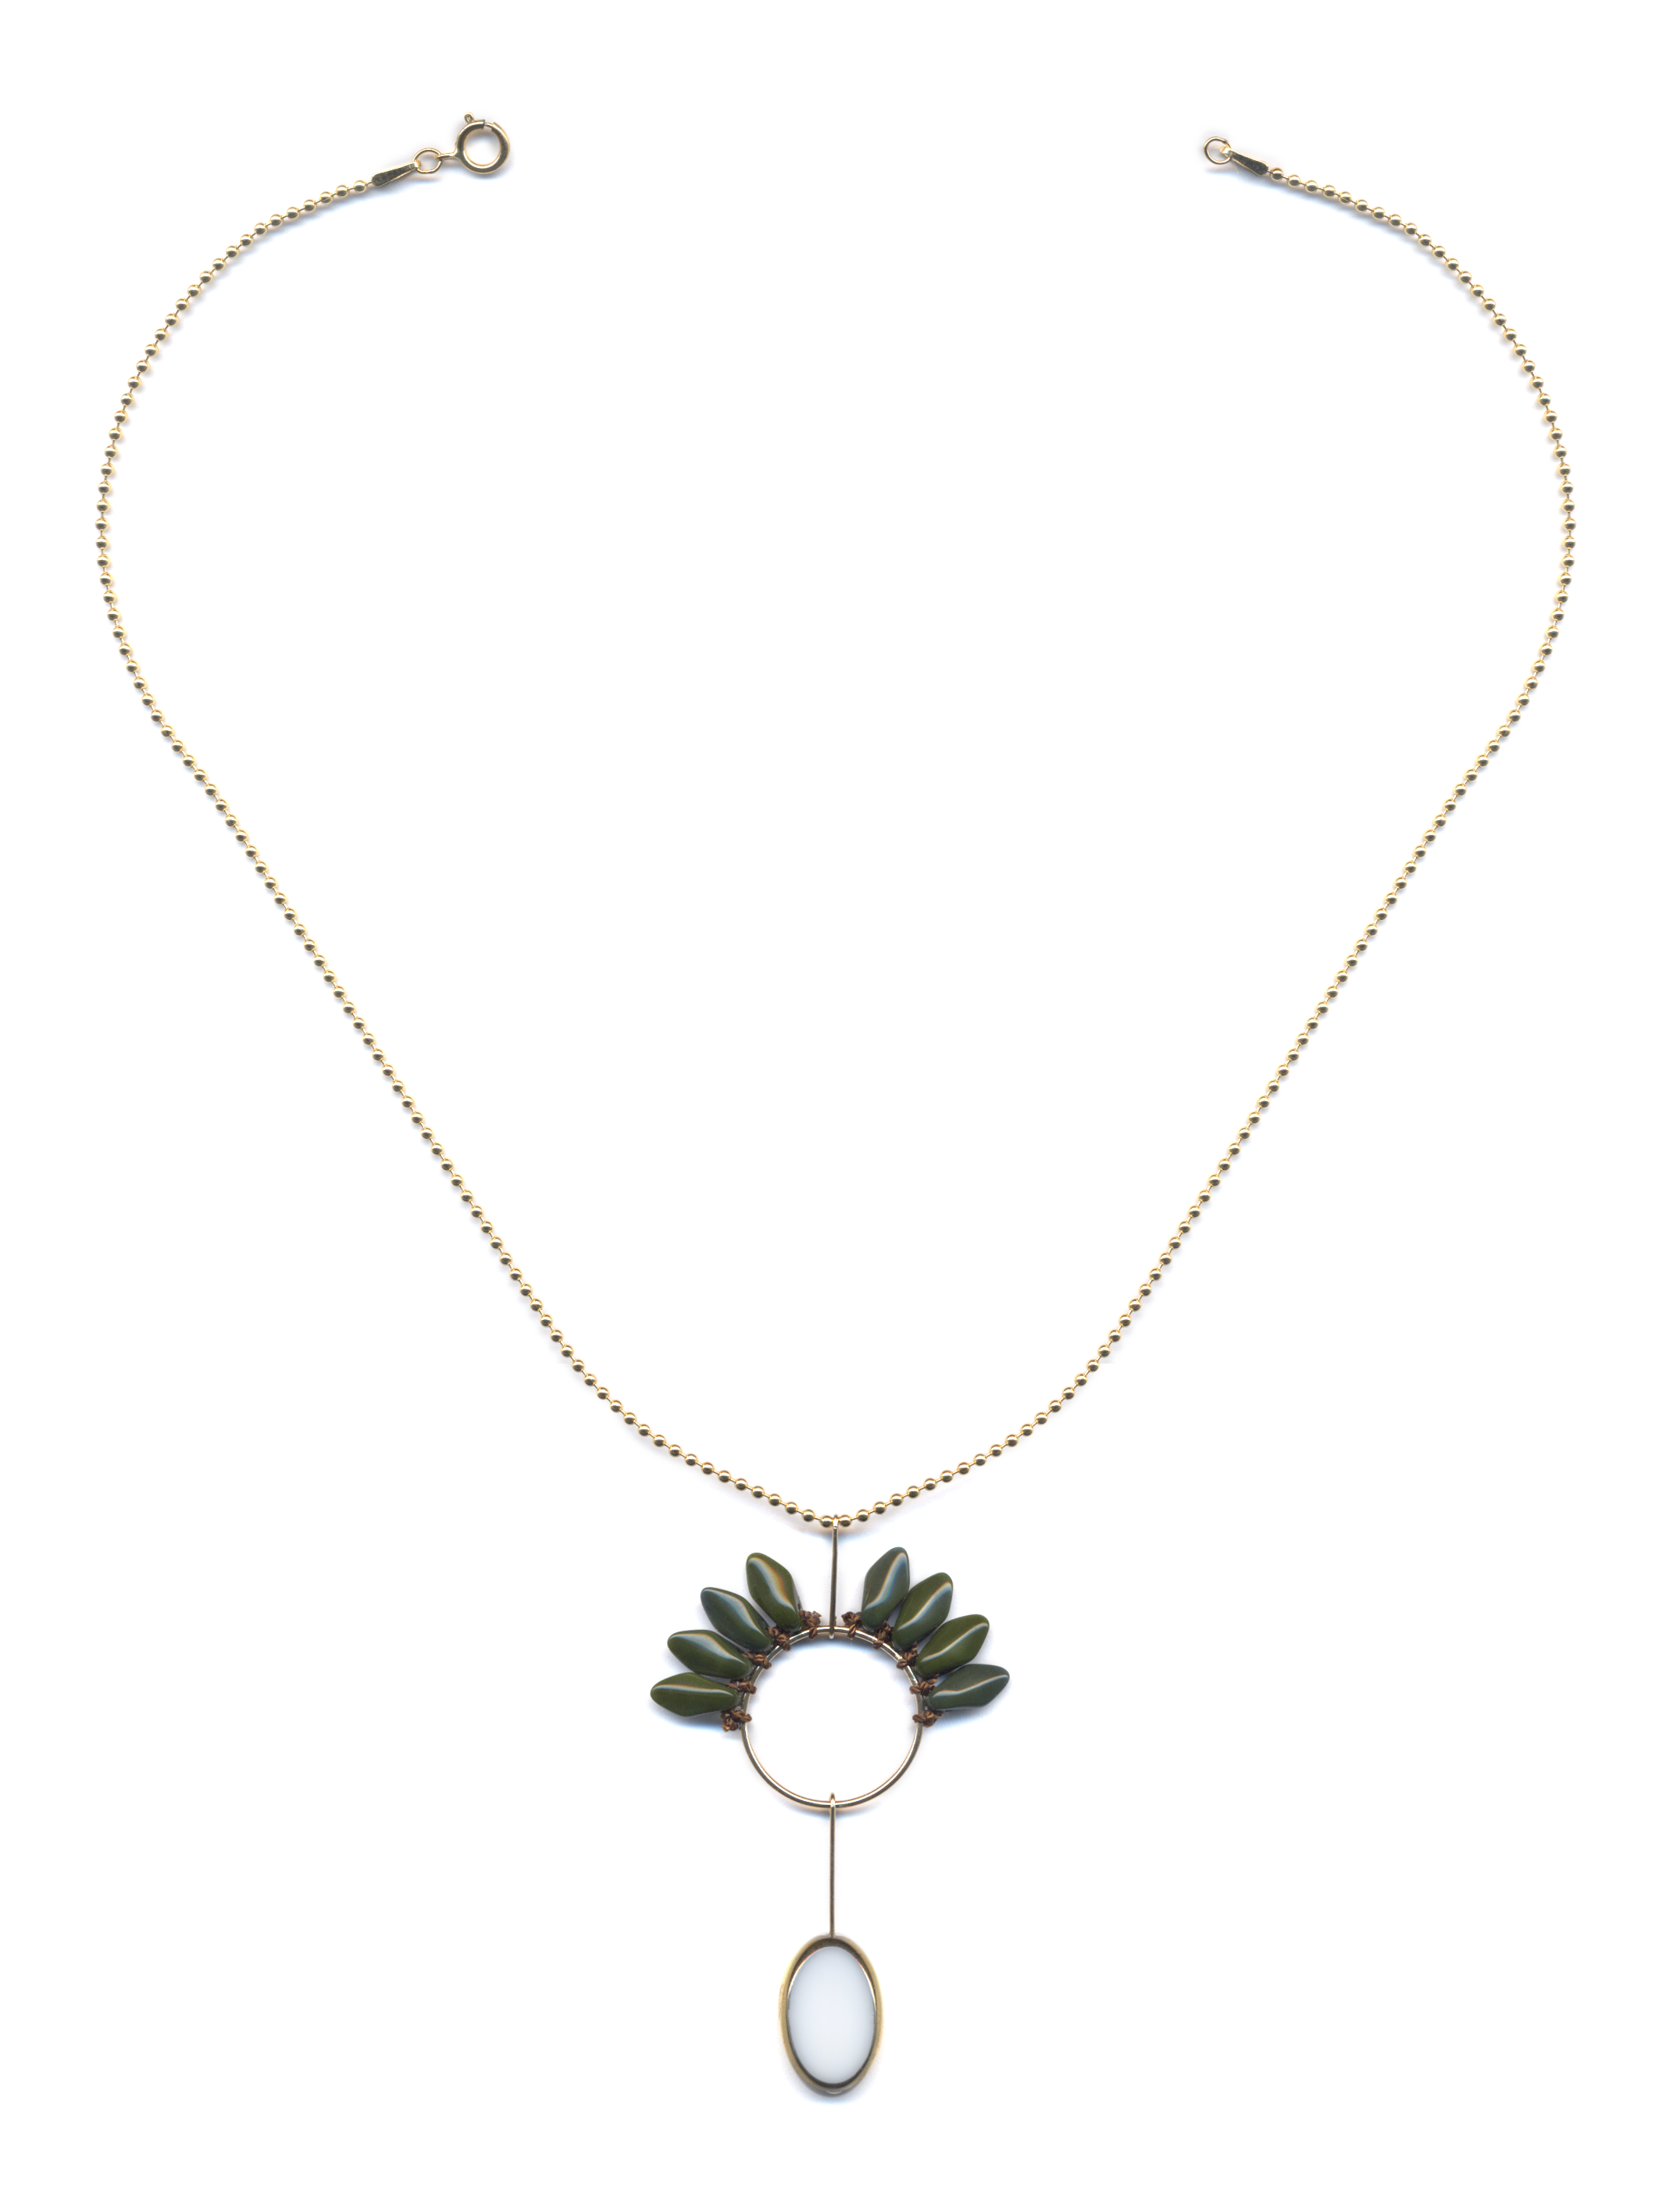 N2106 (Bloom) Necklace